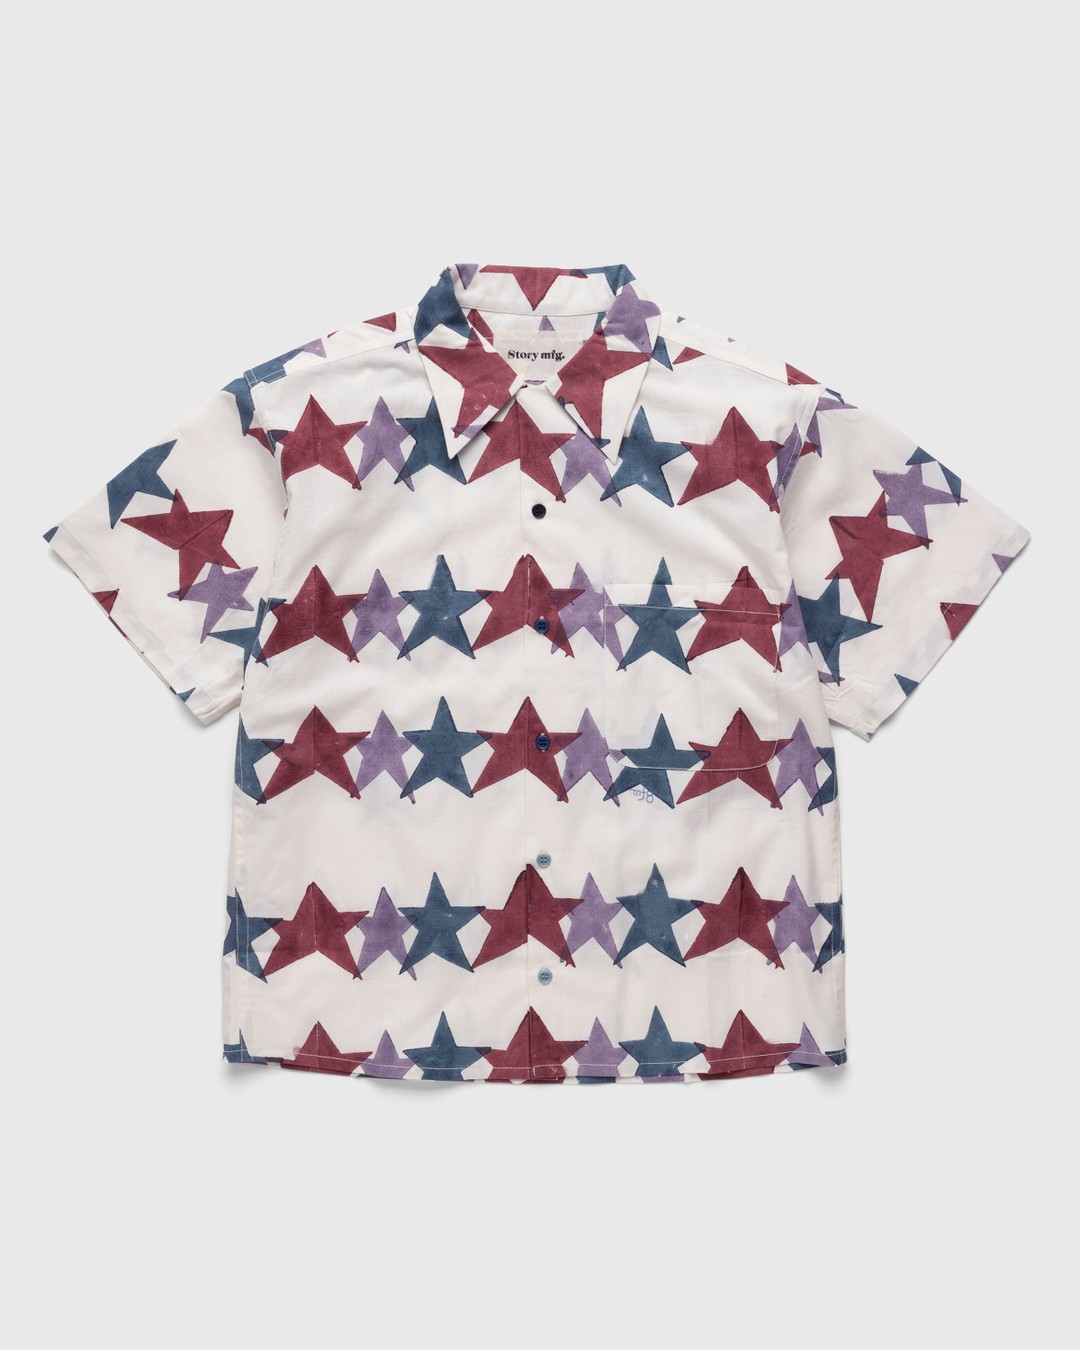 Story mfg. – Shore Shirt Star Block Print Multi - Shirts - Multi - Image 1